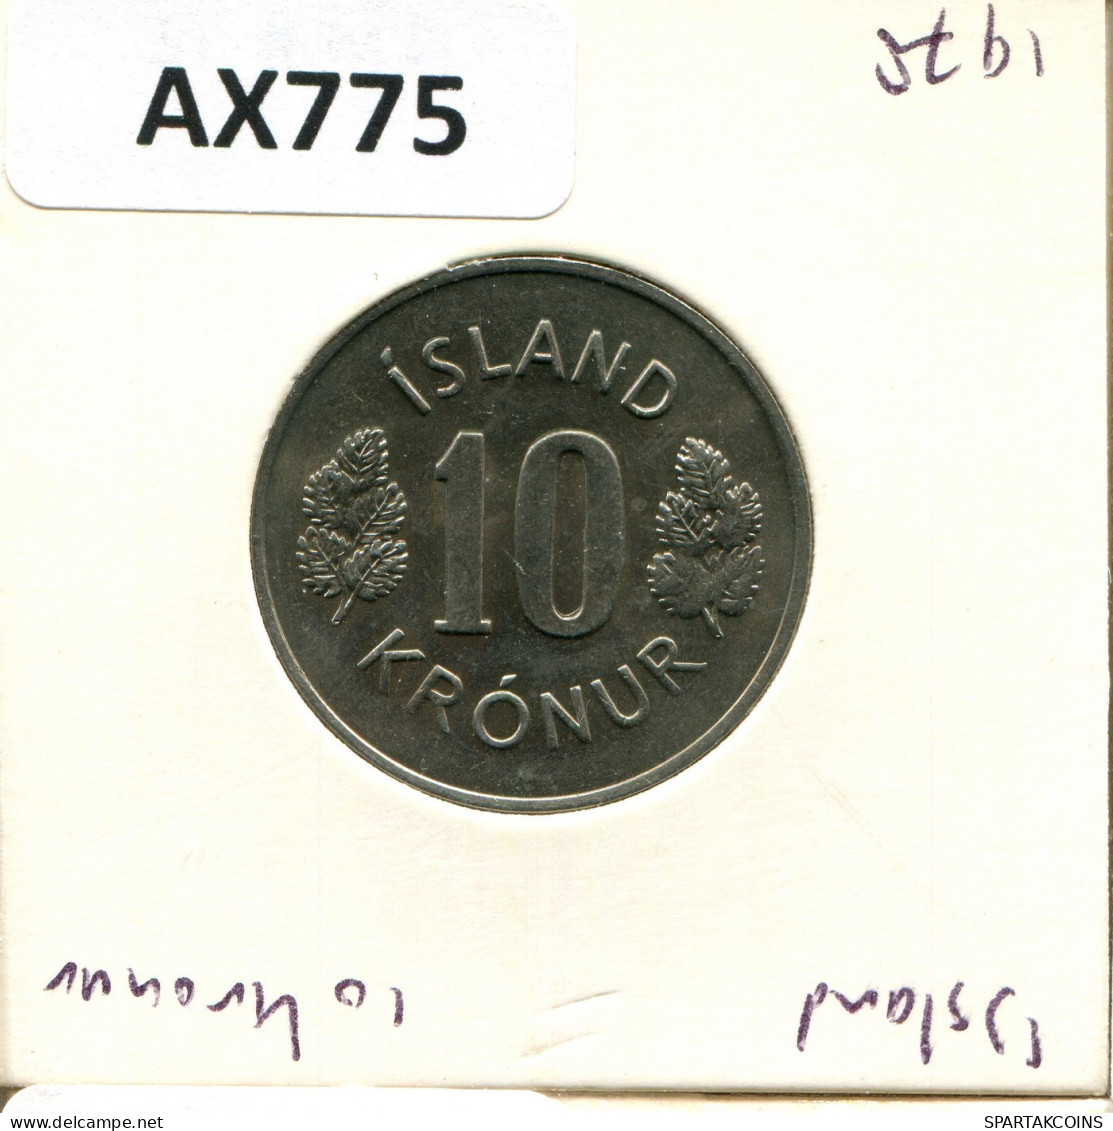 10 KRONUR 1978 ISLANDIA ICELAND Moneda #AX775.E.A - Iceland